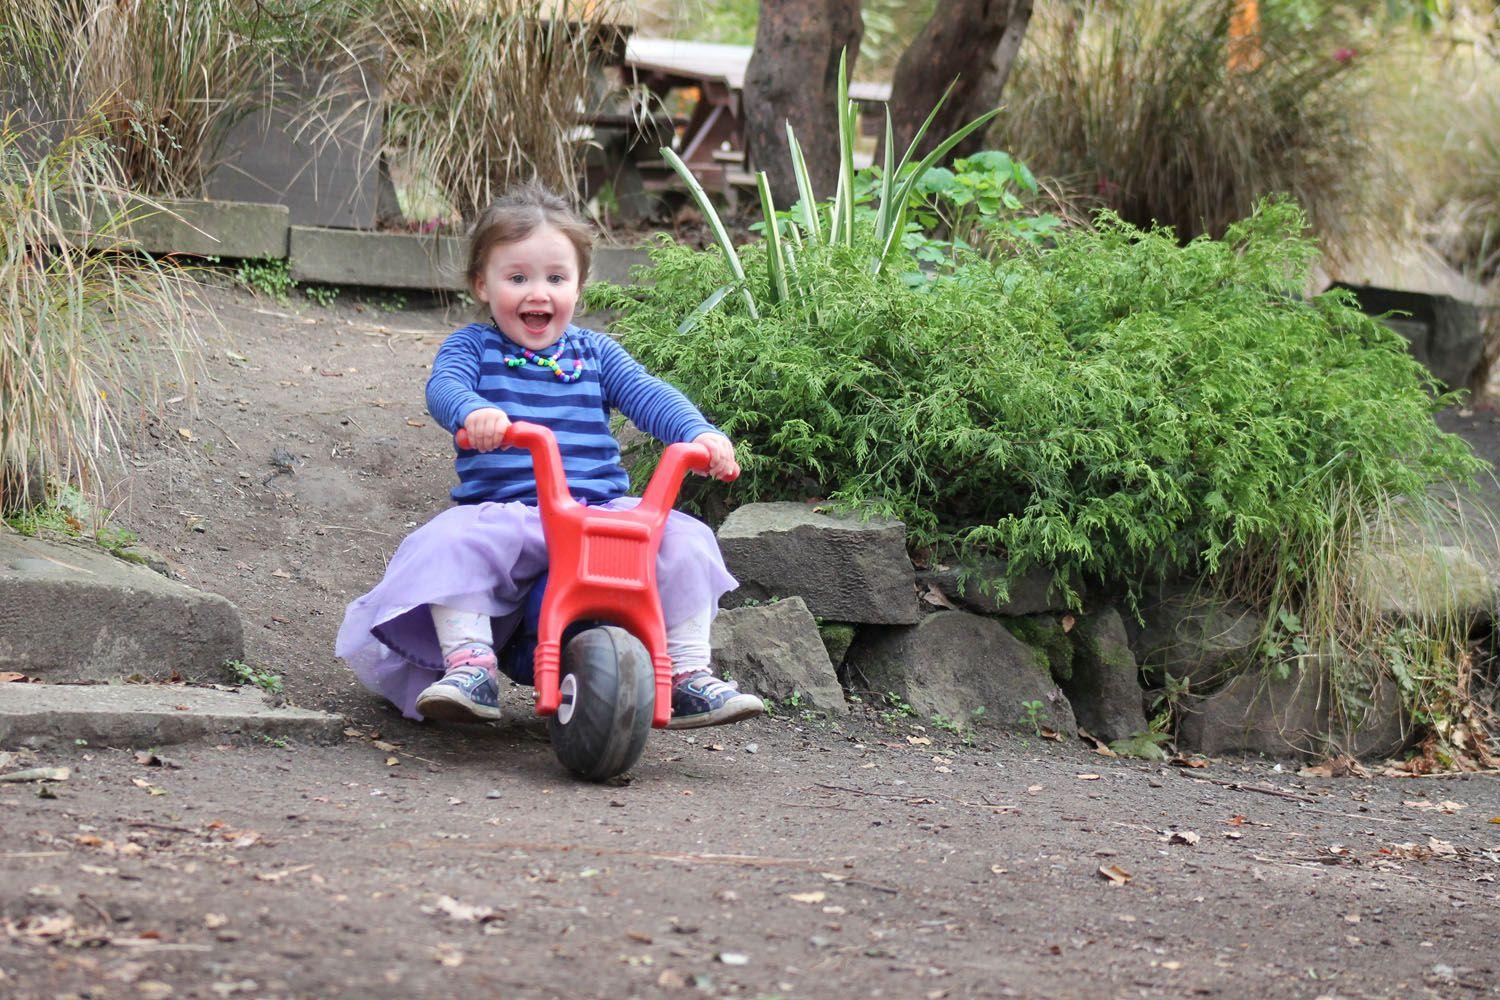 Kid smiling while riding toy bike